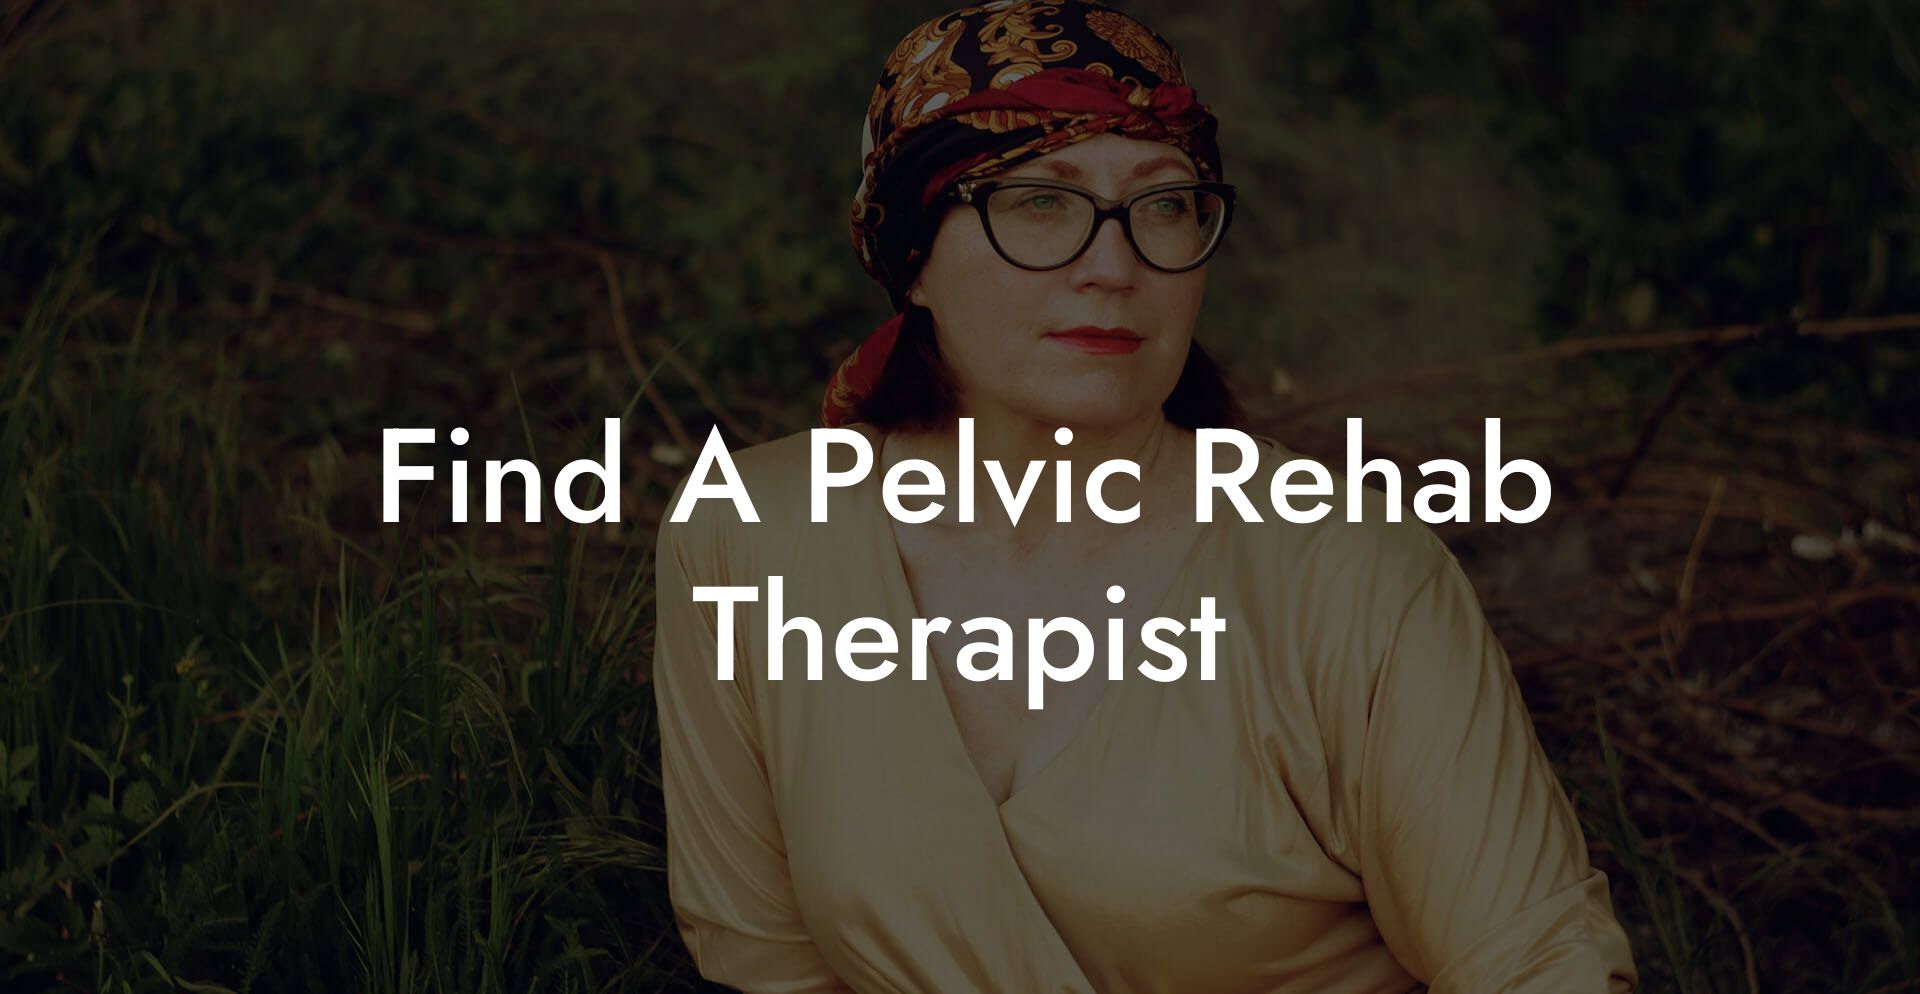 Find A Pelvic Rehab Therapist